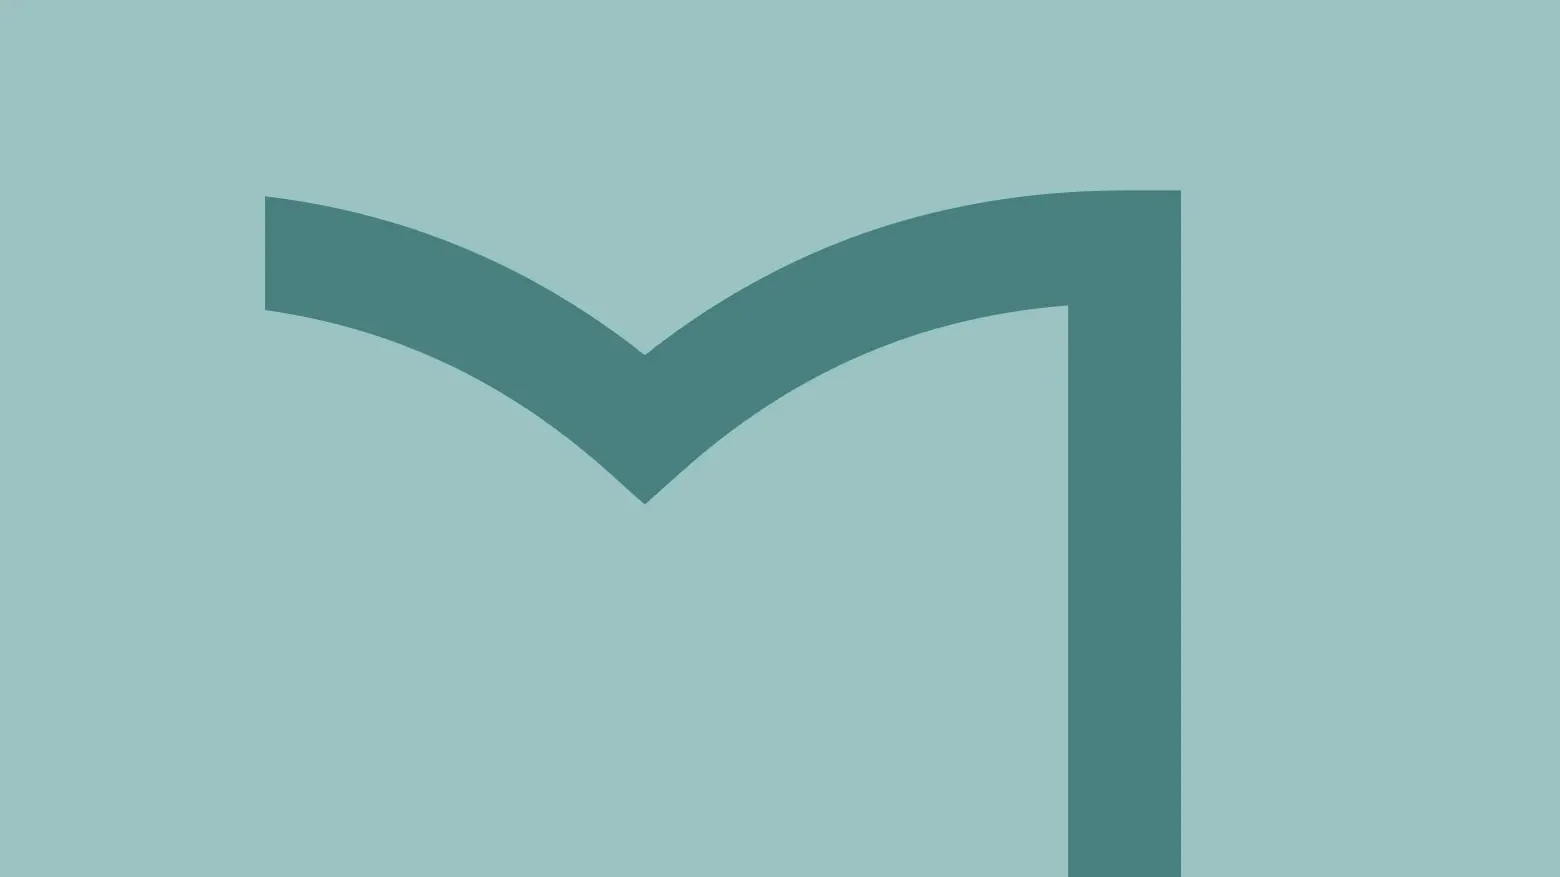 Maymont blue M logo over a light blue background